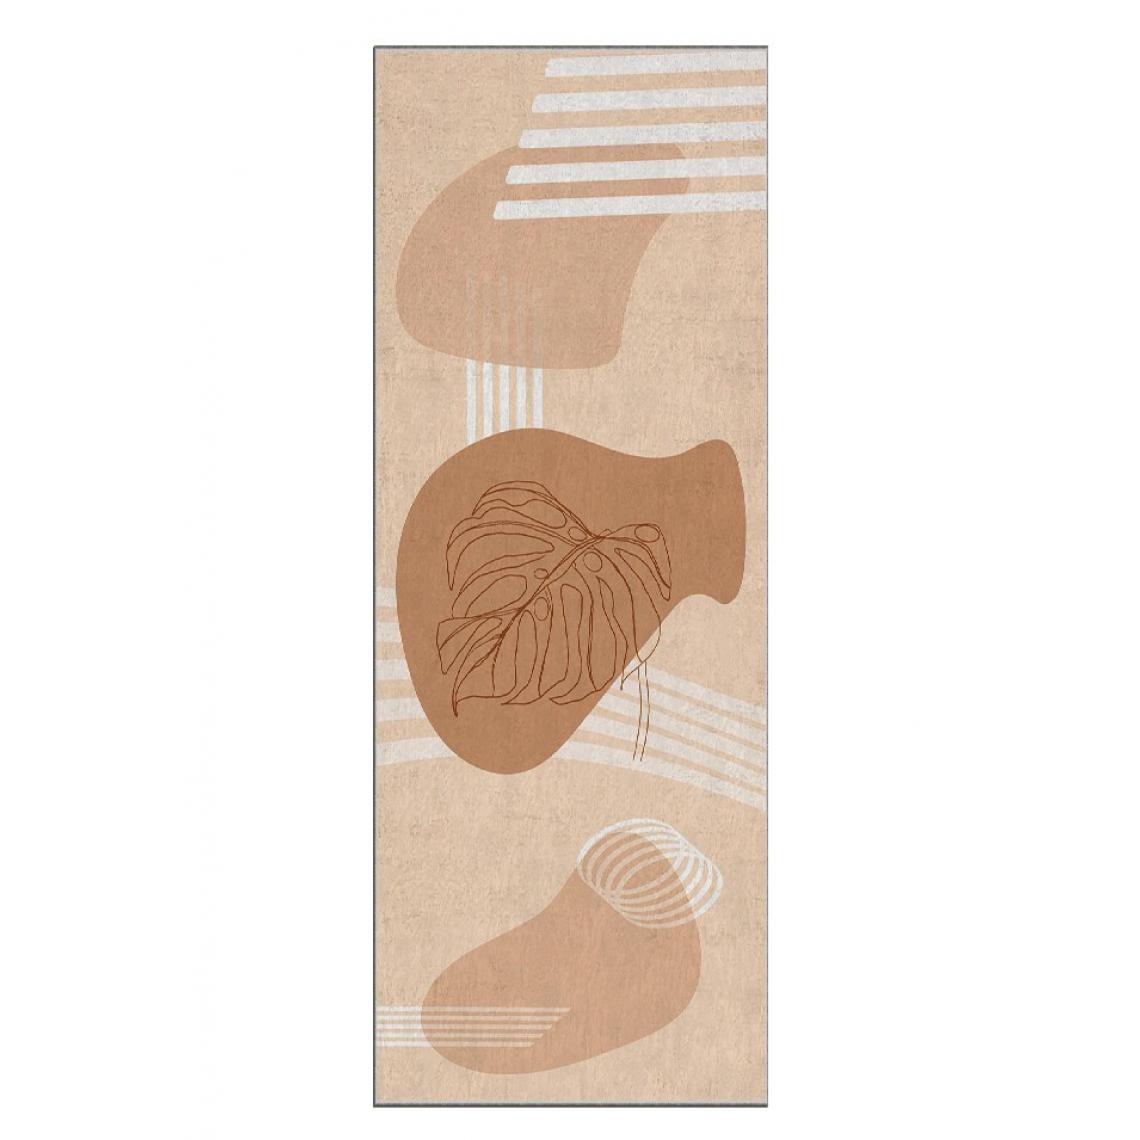 Homemania - HOMEMANIA Tapis décoratif Outline 5 - Marron - 80 x 150 cm - Tapis